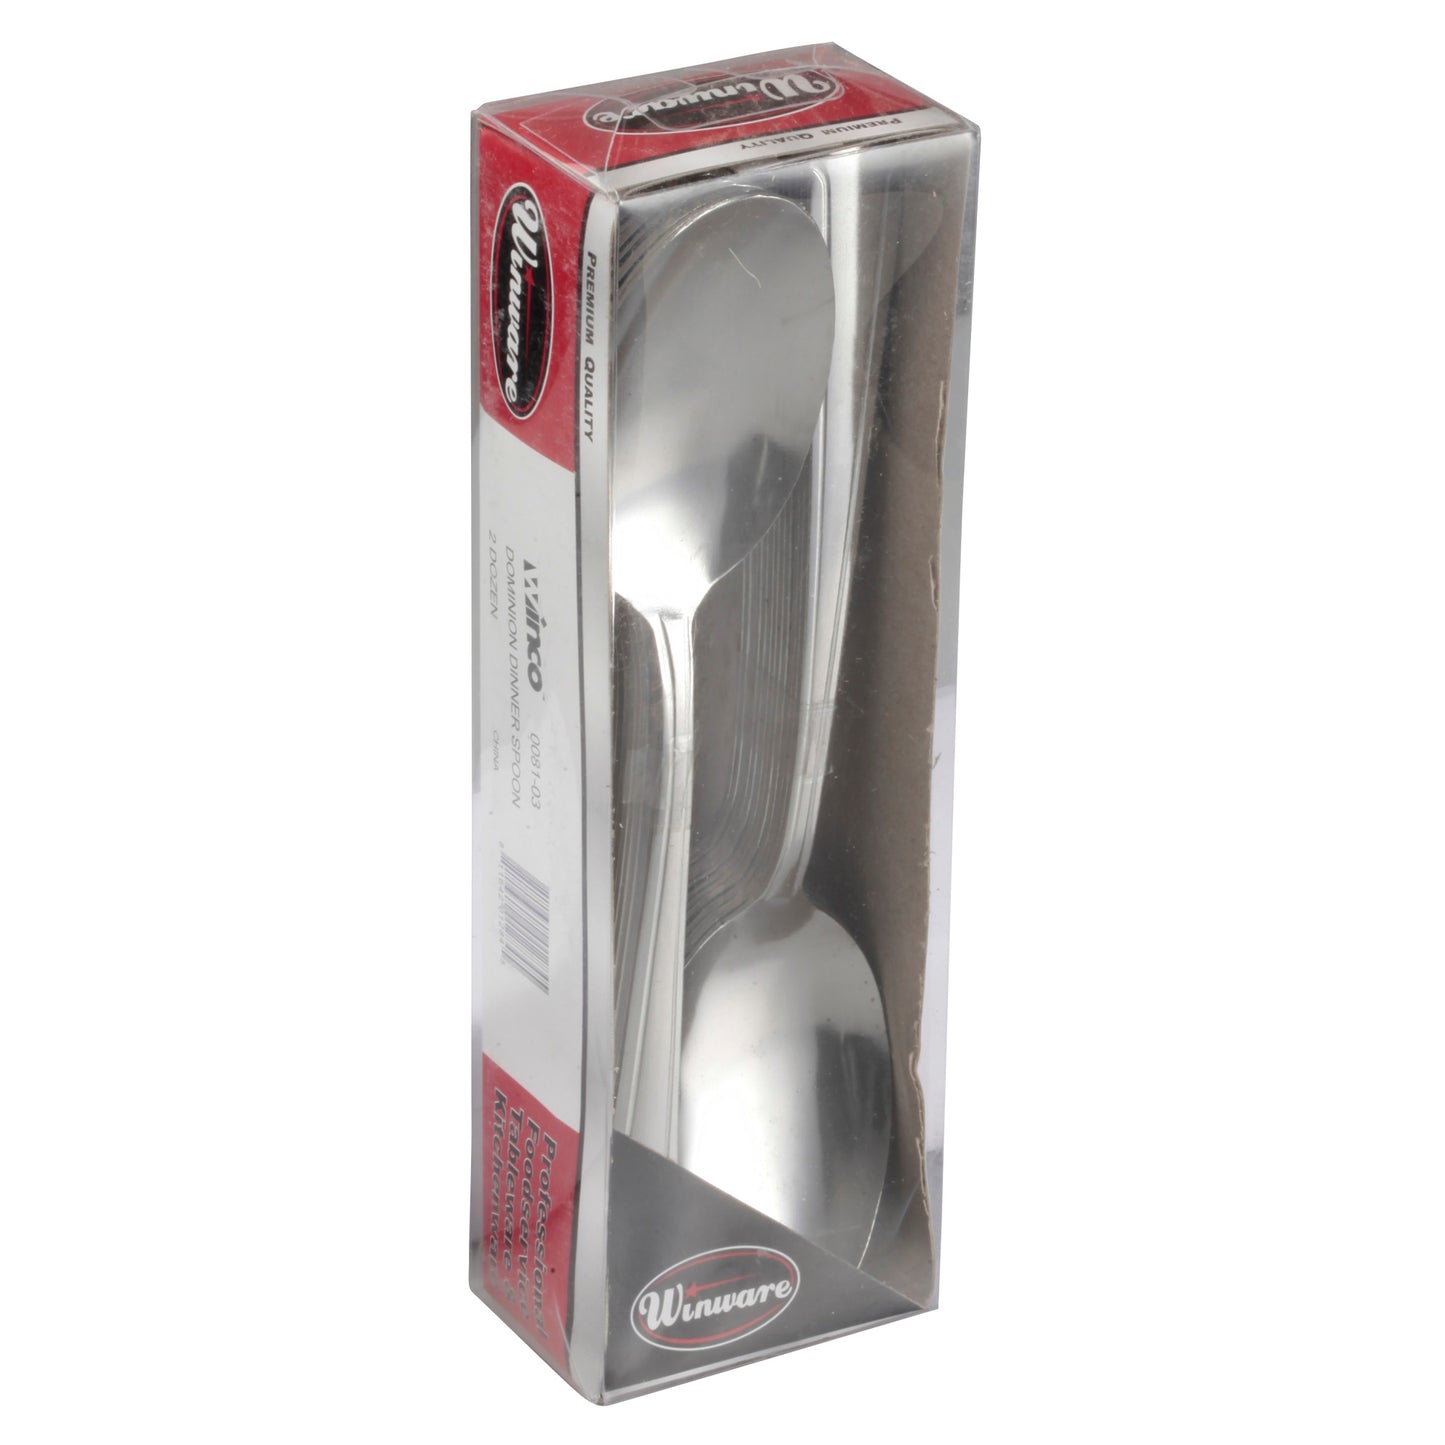 0081-03 - Dominion Dinner Spoon, 2-doz/pk, 18/0 Medium Weight